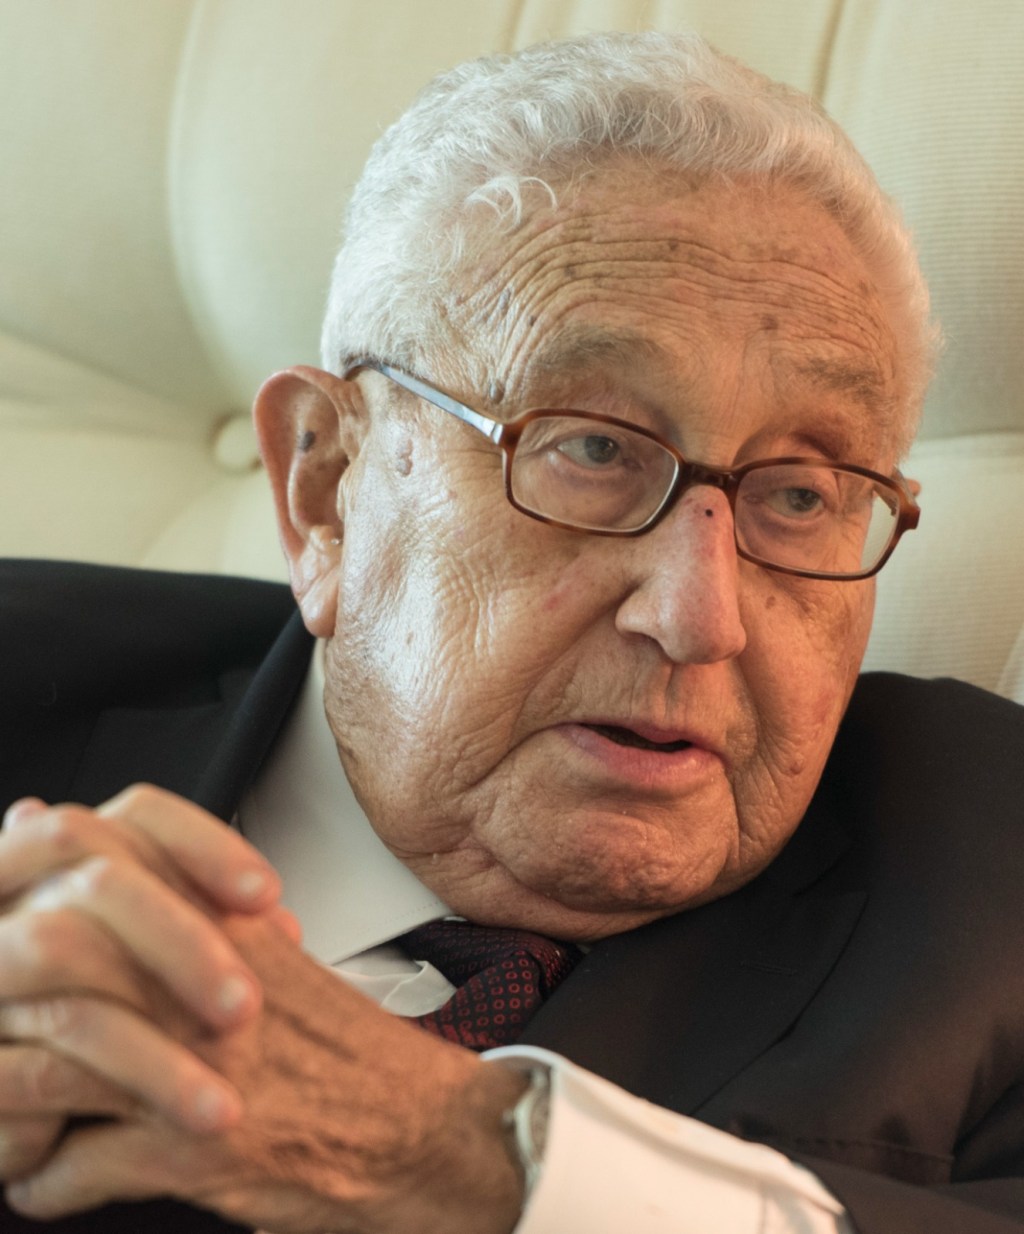 Henry Kissinger in 2016. Source: Wikipedia.